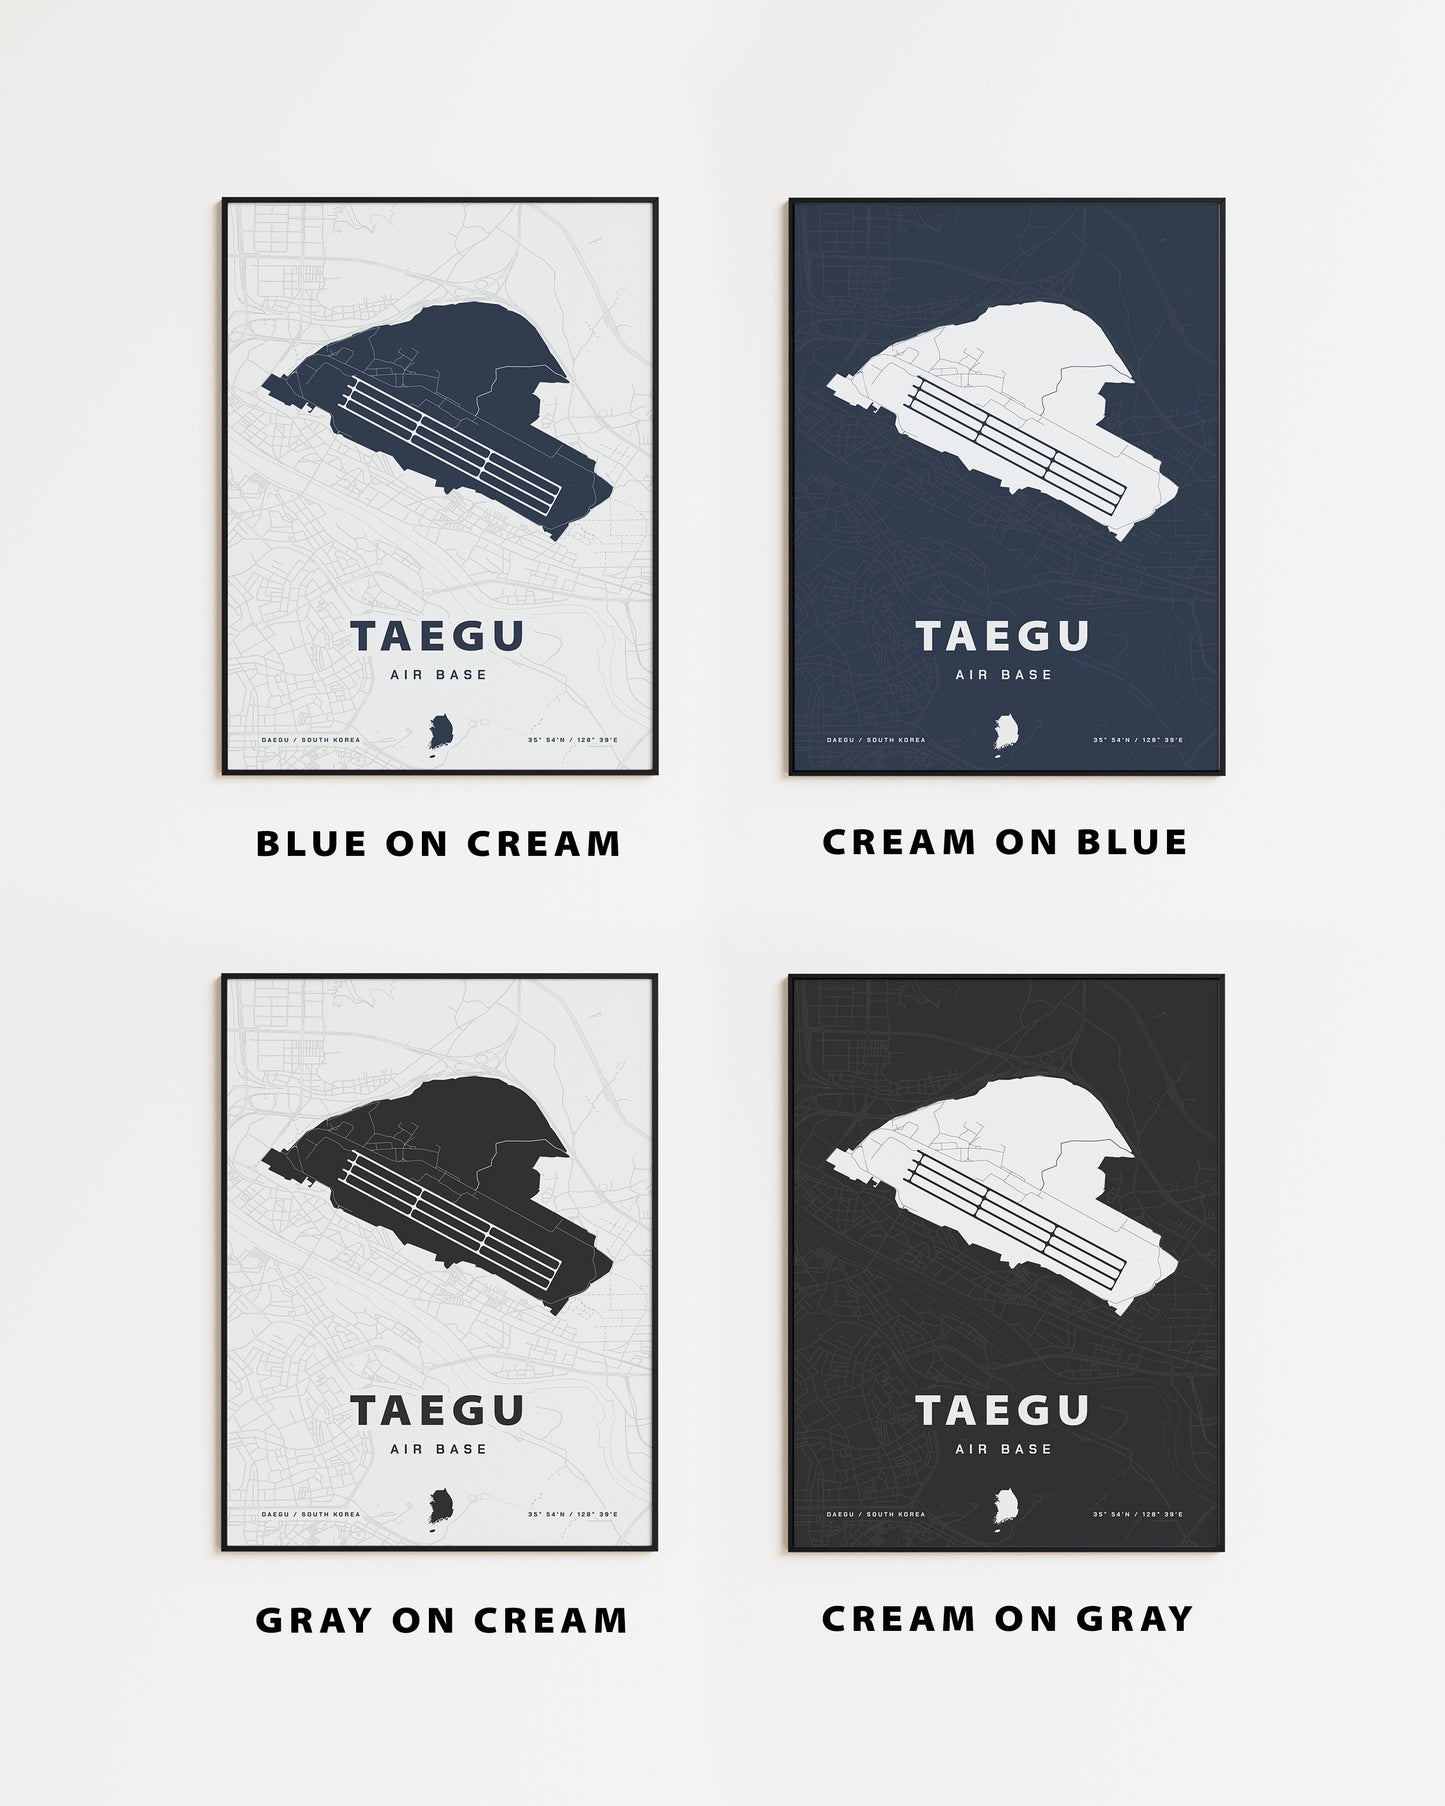 Taegu Air Base Map Print